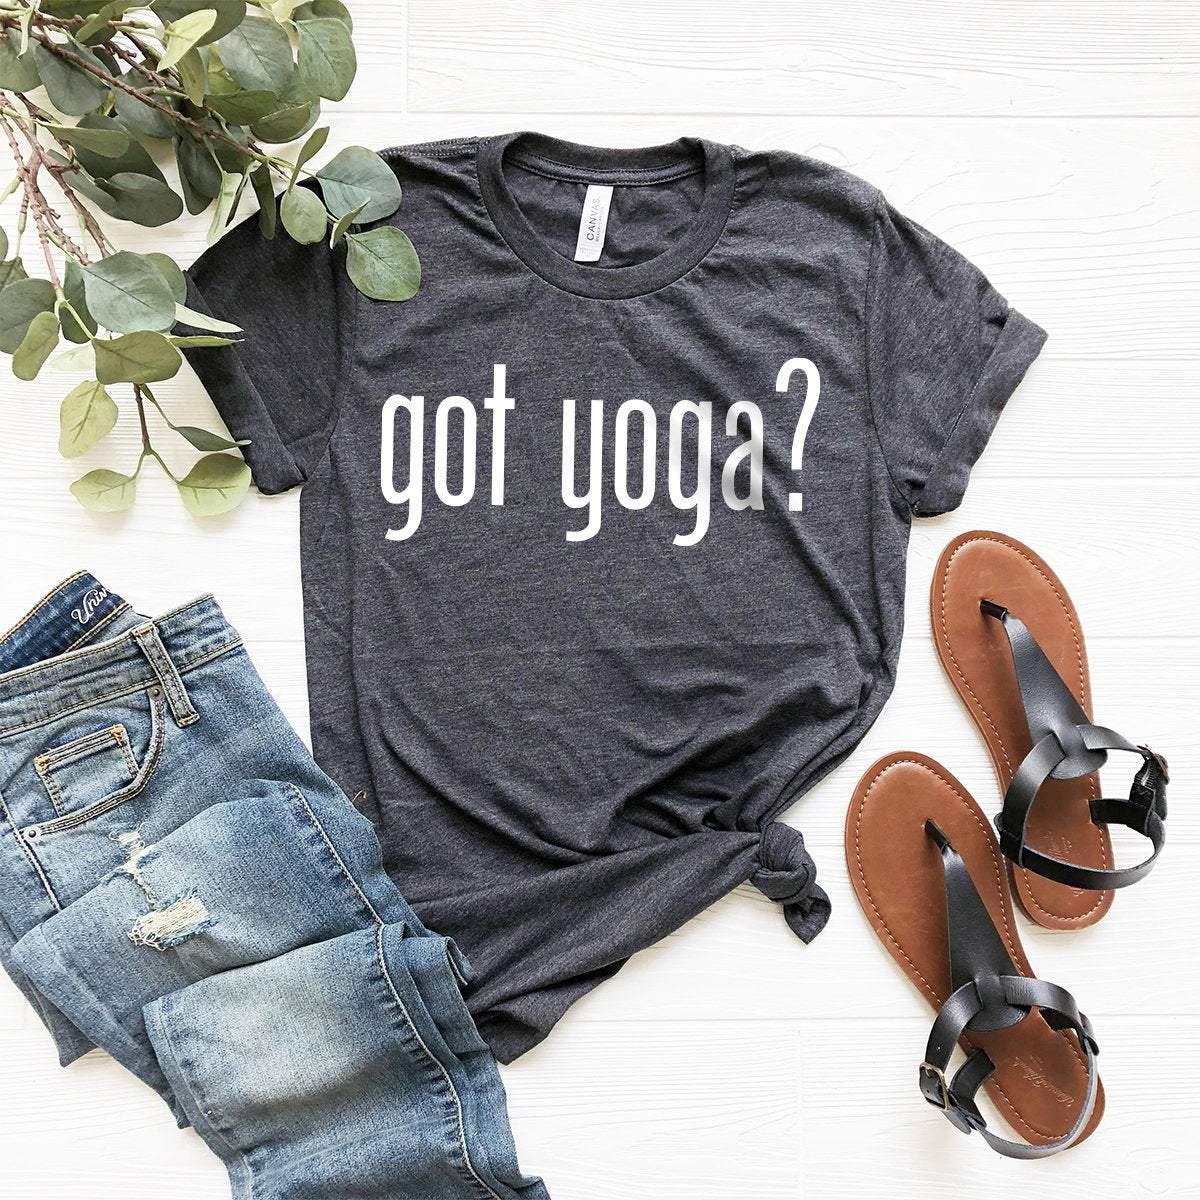 Yoga Shirt, Meditation Shirt, Yoga T-Shirt, Yoga Lover Tee, Got Yoga? Shirt, Inspirational Shirt, Yoga Tee, Yoga Shirt For Women, Yoga Gift - Fastdeliverytees.com